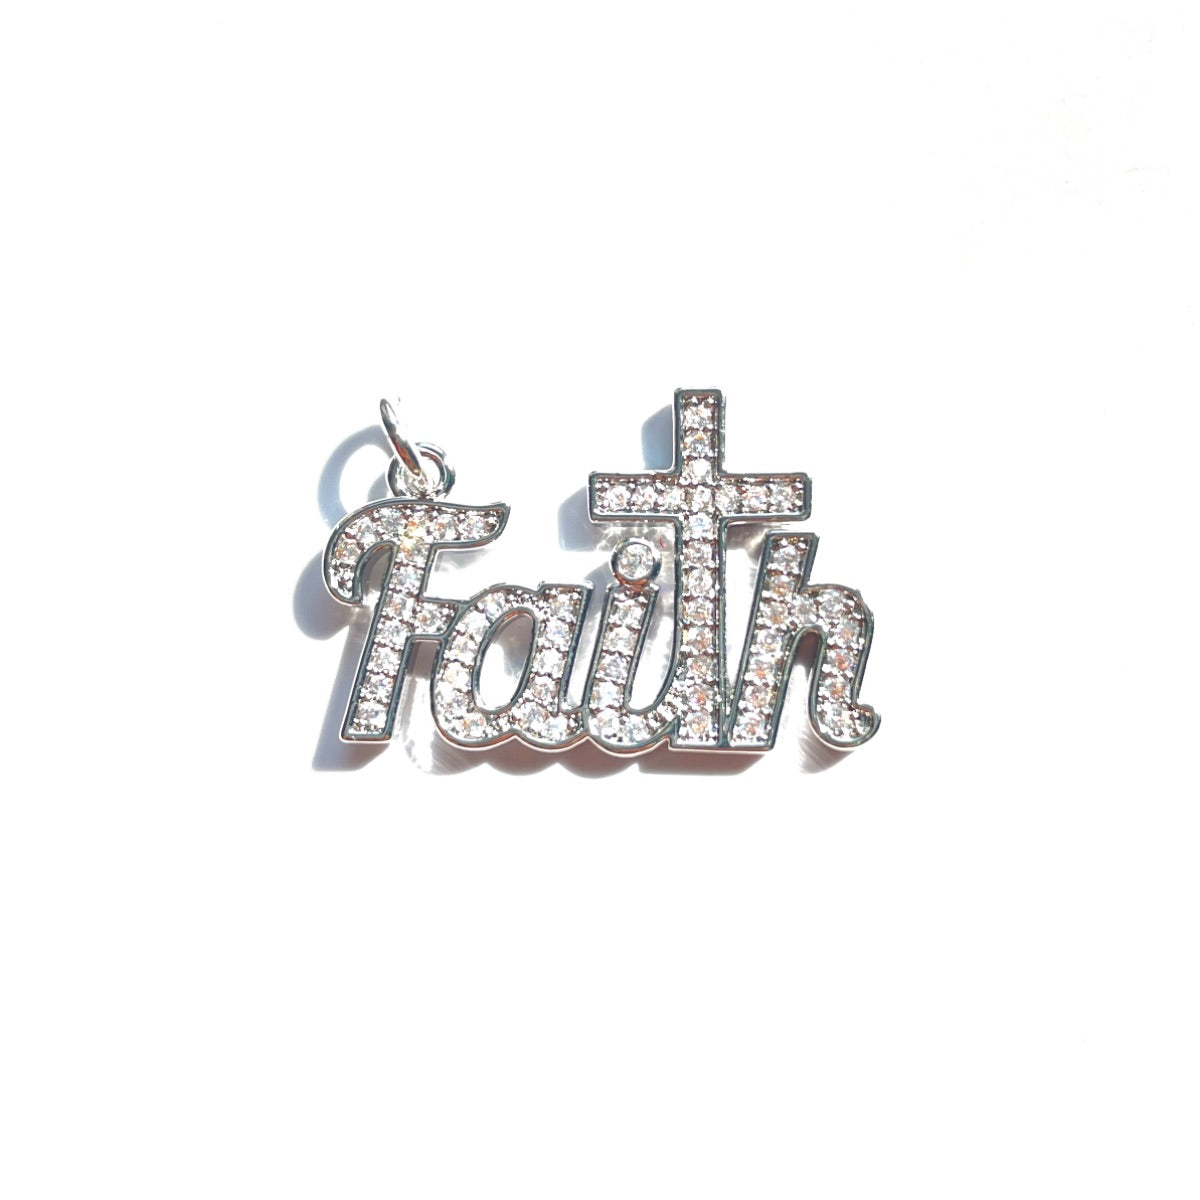 10pcs/lot 30*19.5mm CZ Paved Cross Faith Word Charms Silver CZ Paved Charms Christian Quotes Words & Quotes Charms Beads Beyond